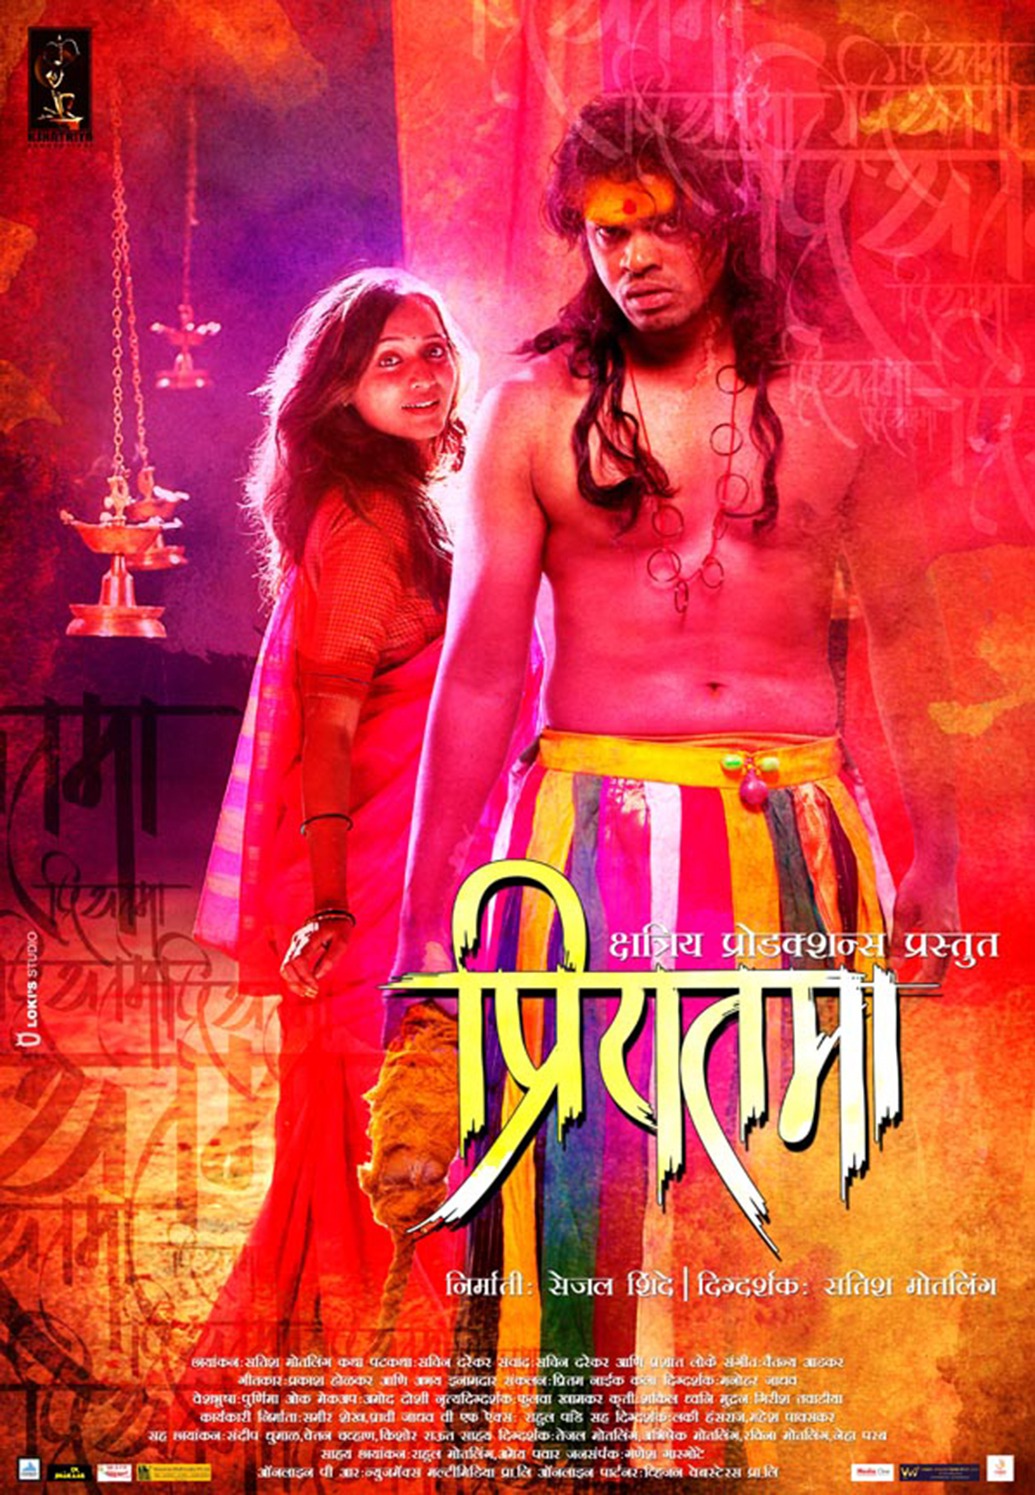 Extra Large Movie Poster Image for Priyatama (#4 of 9)